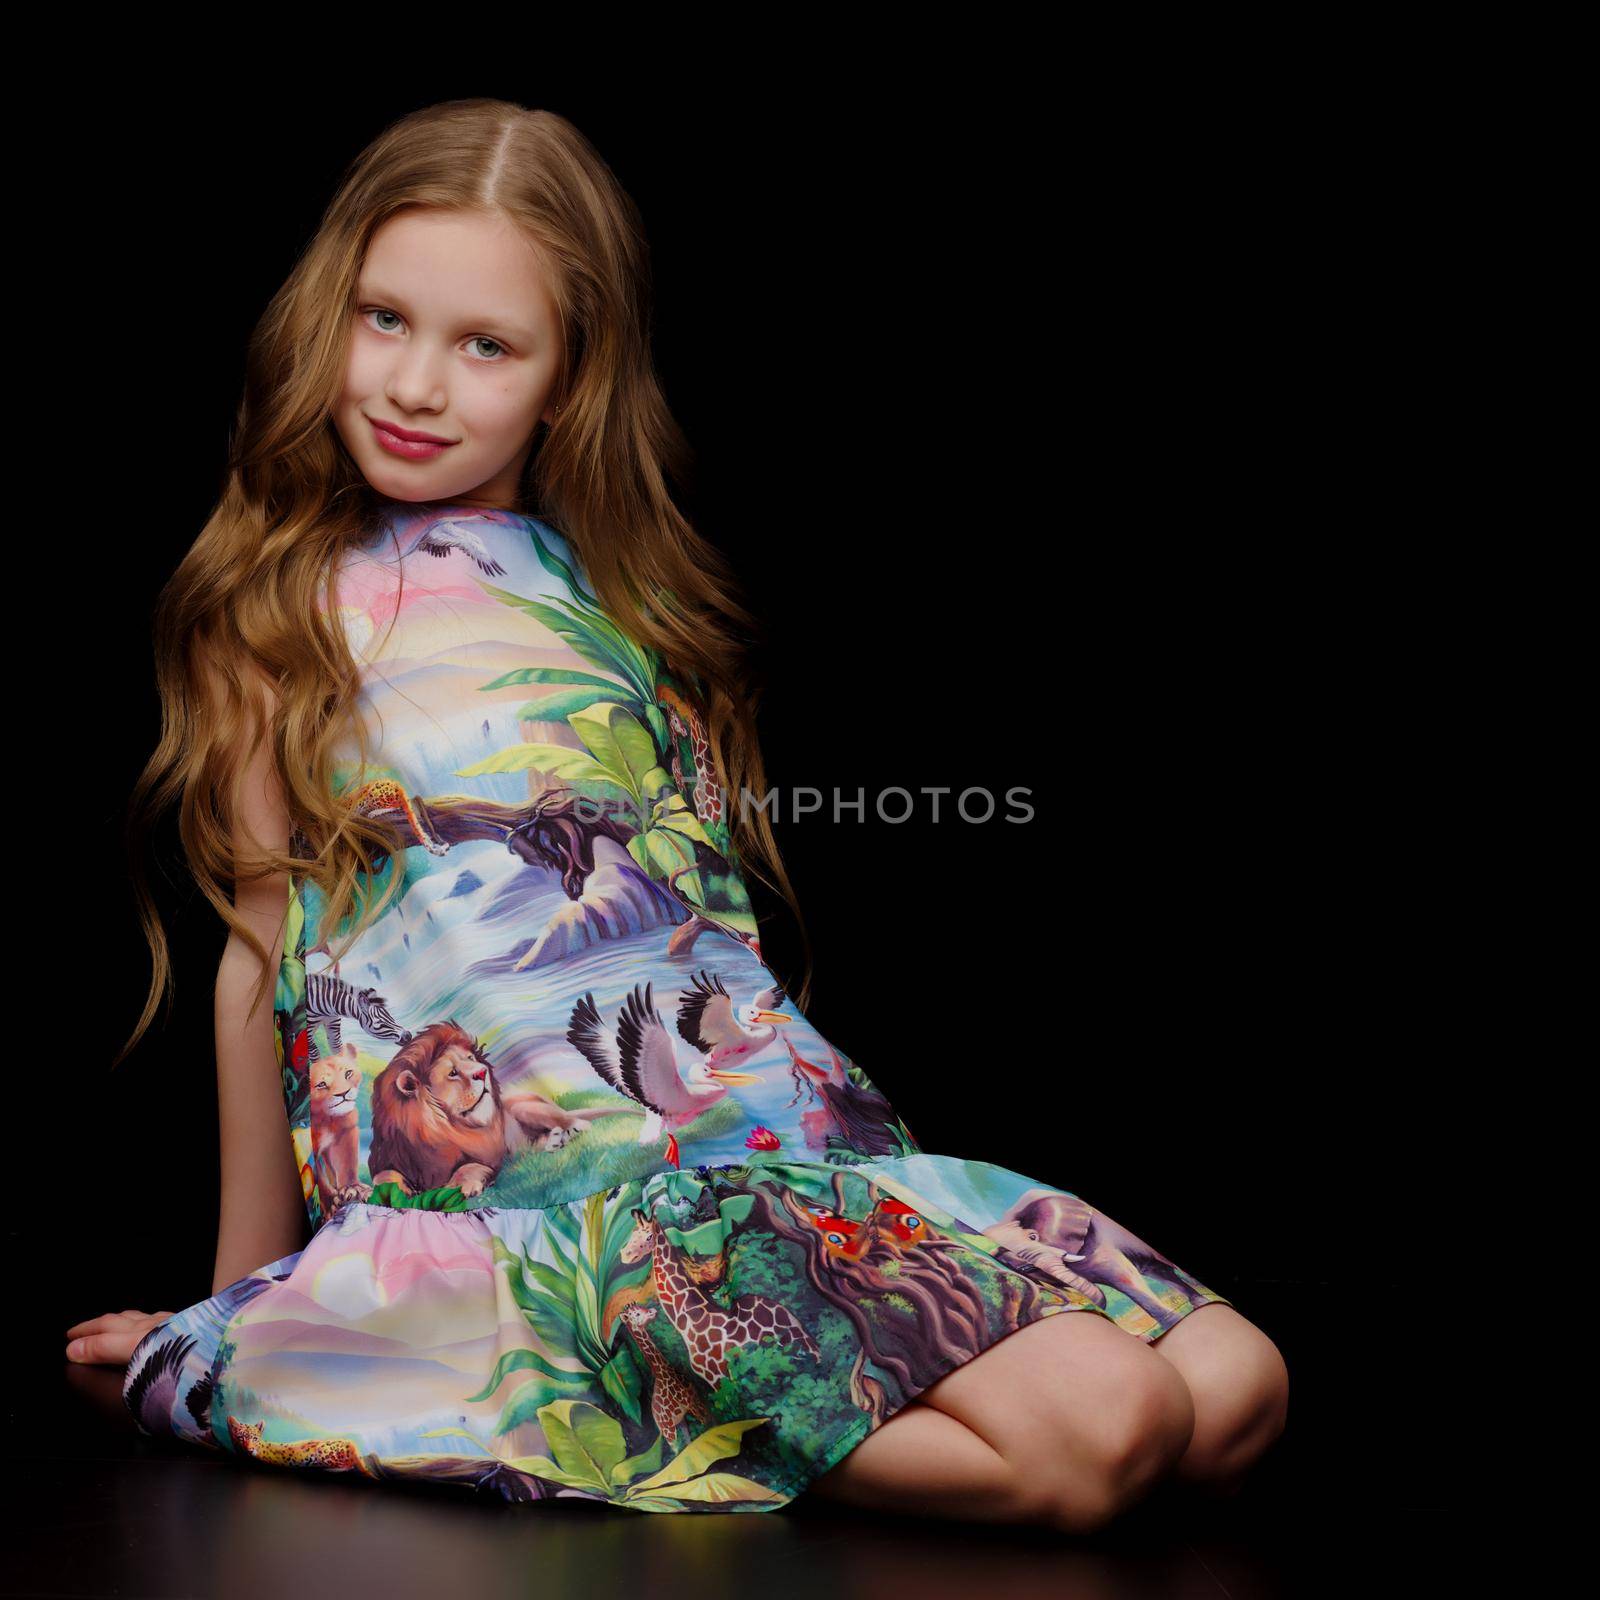 Little girl on a black background by kolesnikov_studio